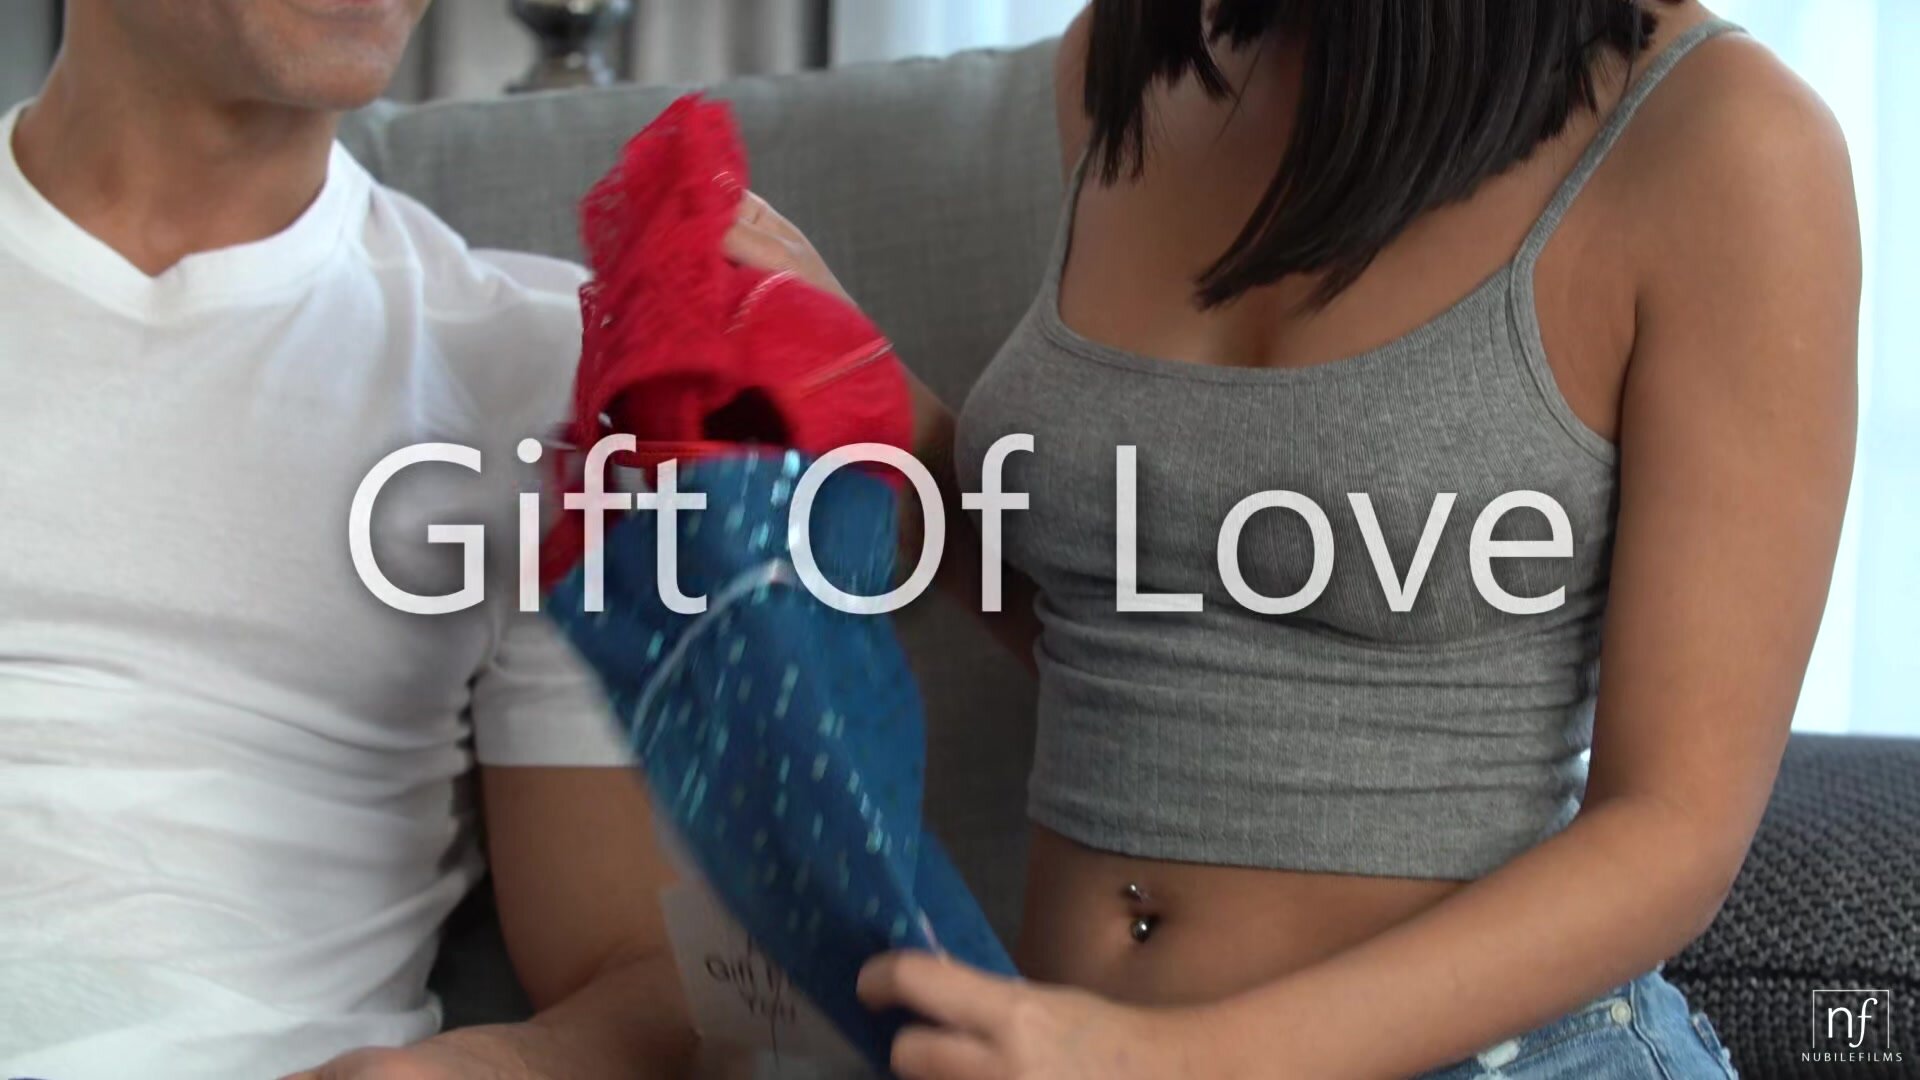 Sarah Cute & Sharon White - Gift Of Love in HD